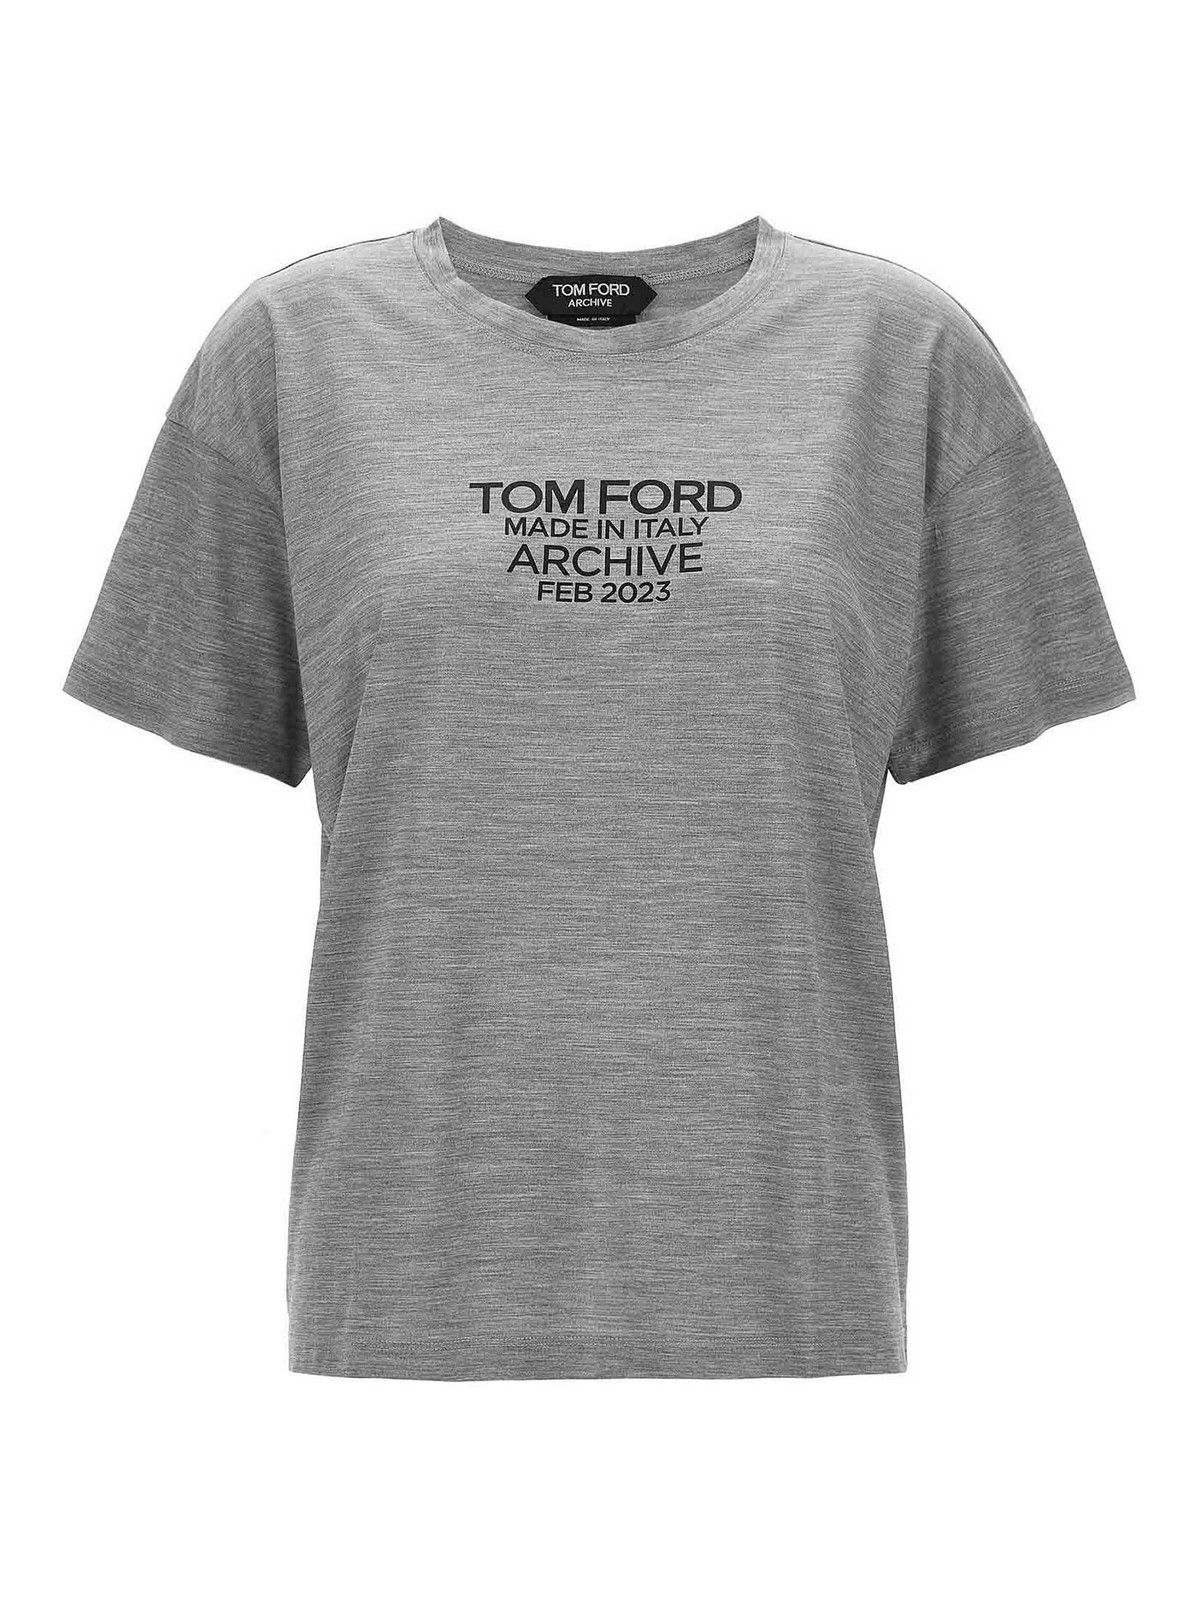 Tom Ford T-Shirt